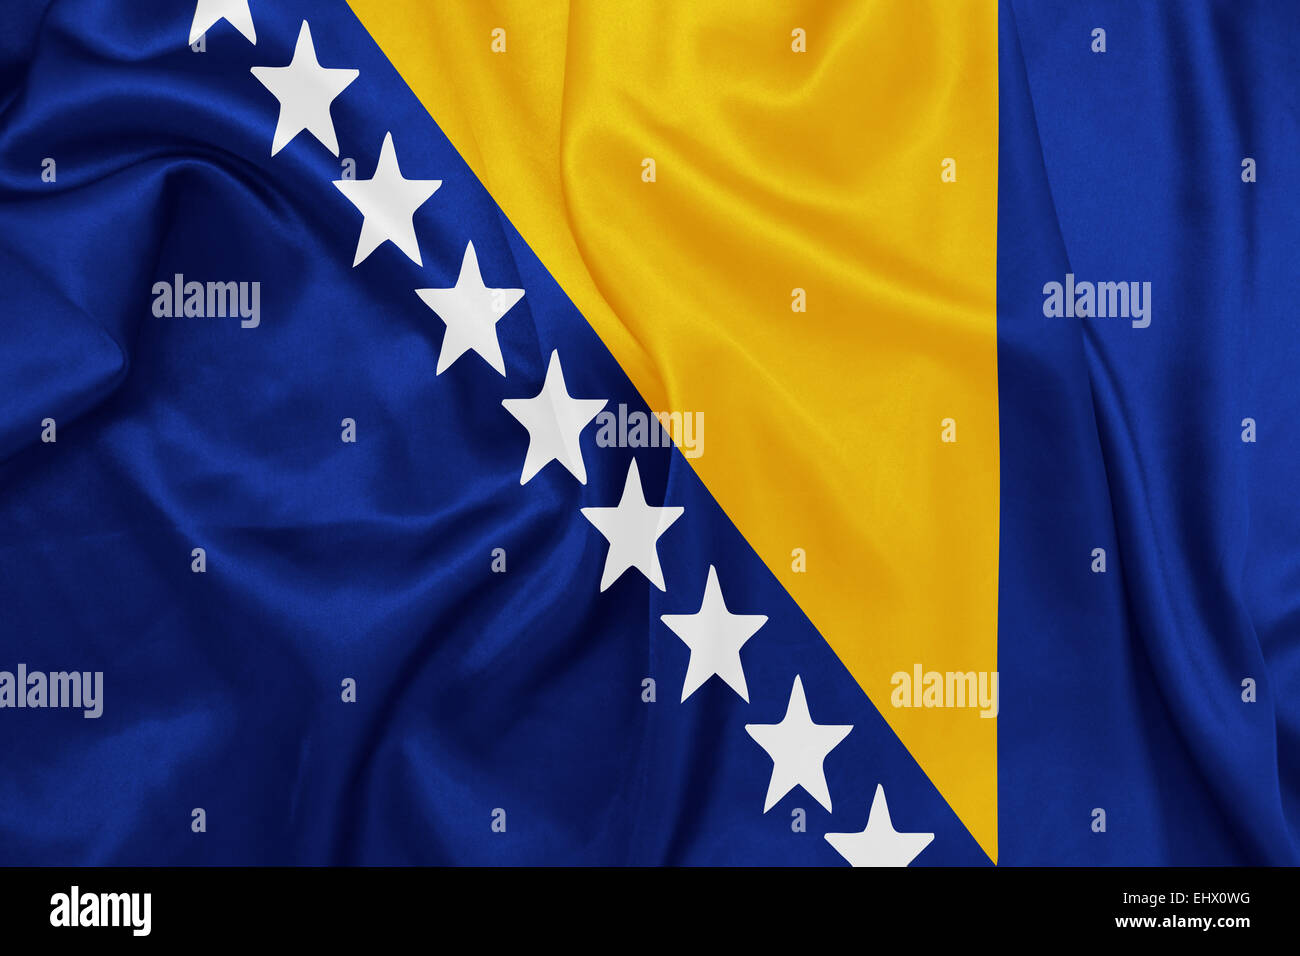 Bosnia and Herzegovina - Waving national flag on silk texture Stock Photo